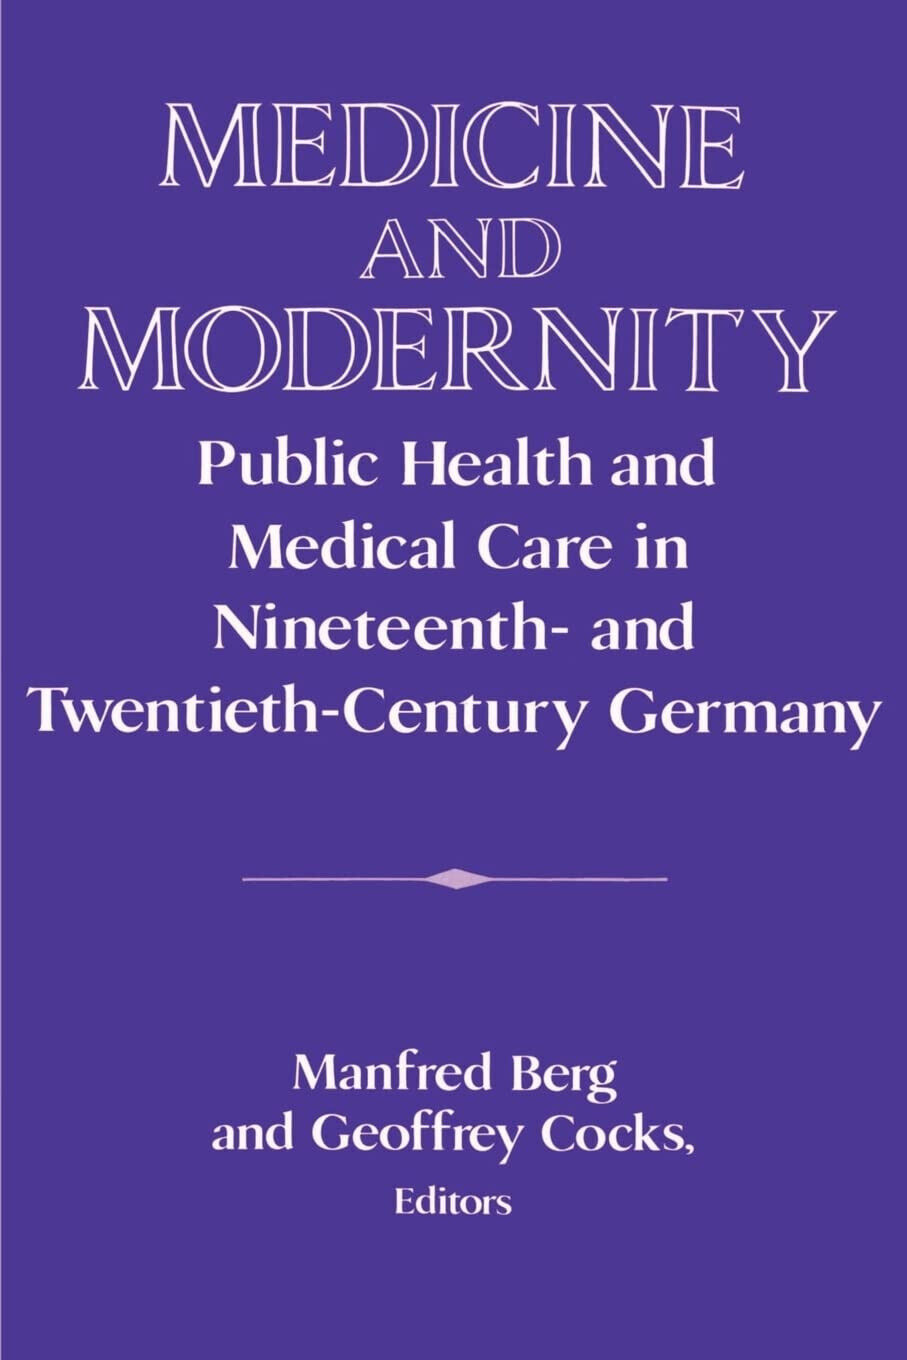 Medicine and Modernity - Manfred Berg  - Cambridge, 2002